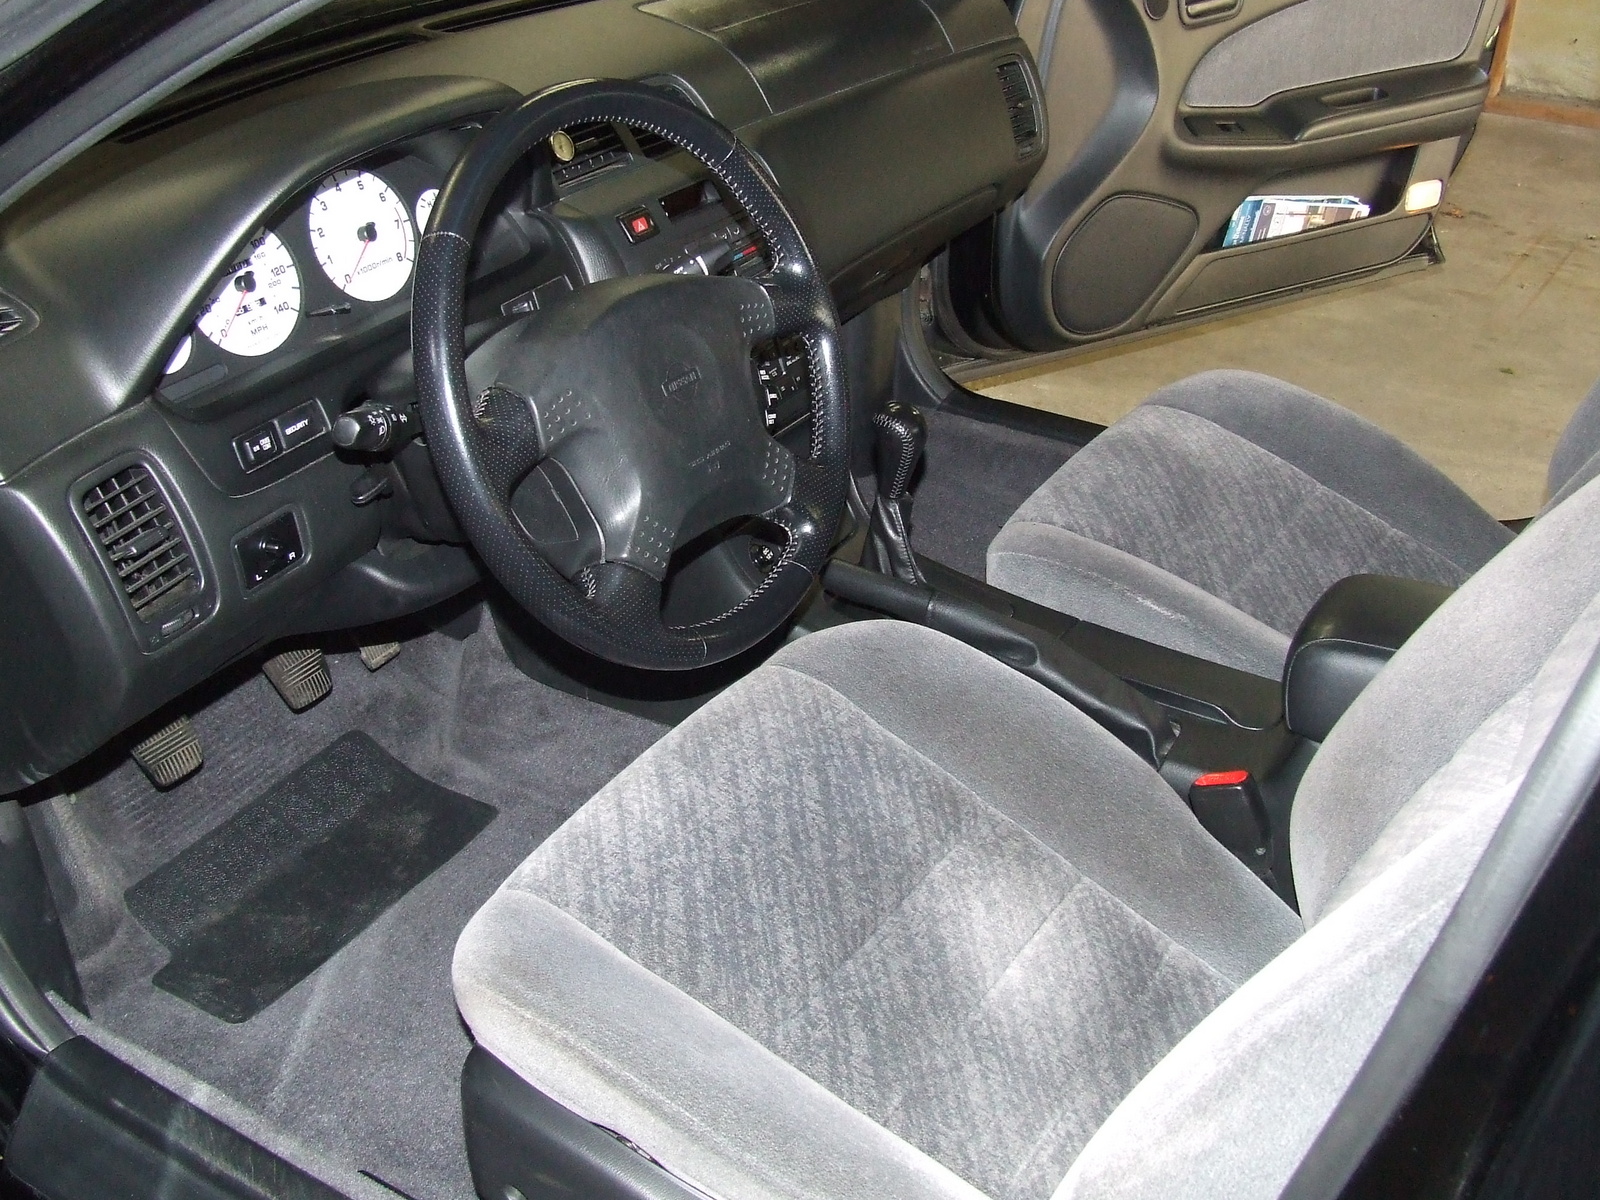 1997 Nissan maxima se interior #1